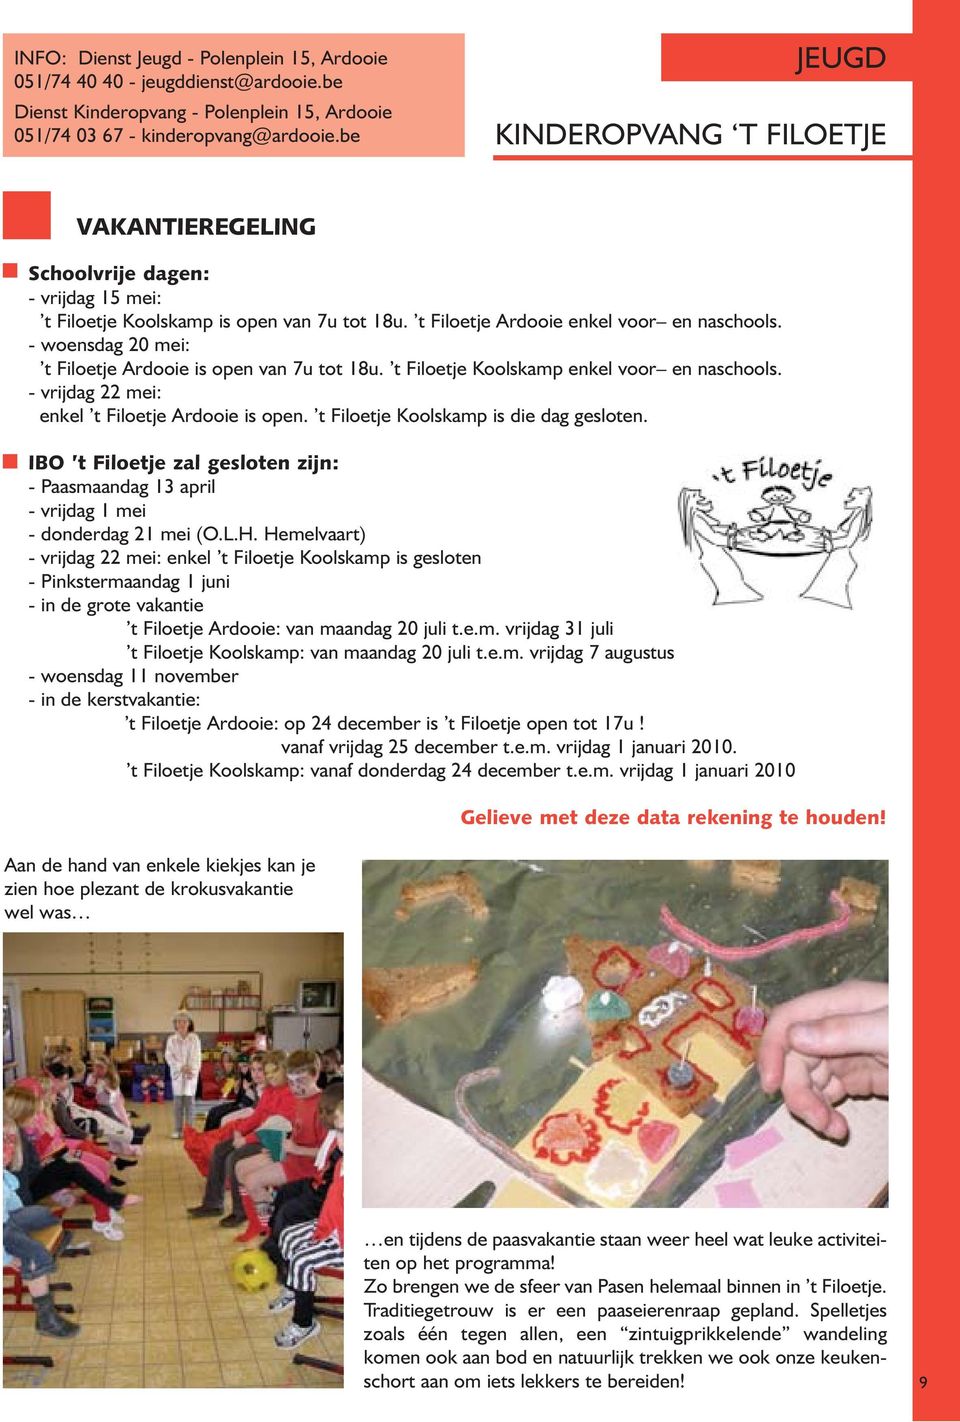 - woensdag 20 mei: t Filoetje Ardooie is open van 7u tot 18u. t Filoetje Koolskamp enkel voor en naschools. - vrijdag 22 mei: enkel t Filoetje Ardooie is open.